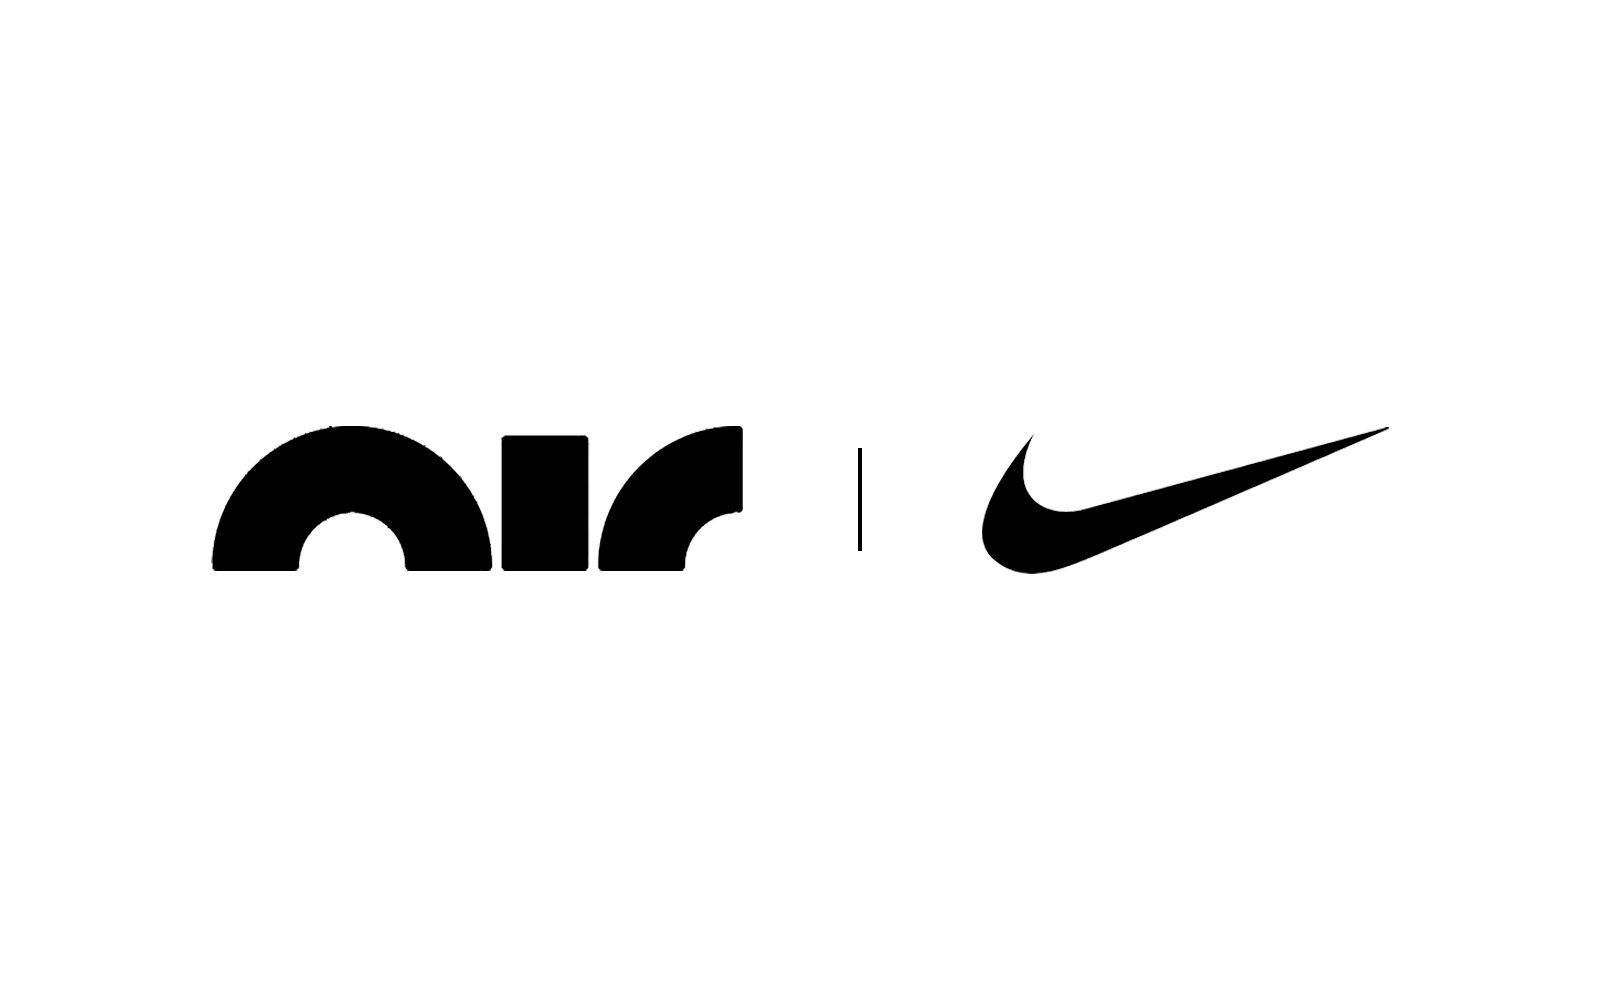 The new Nike logo